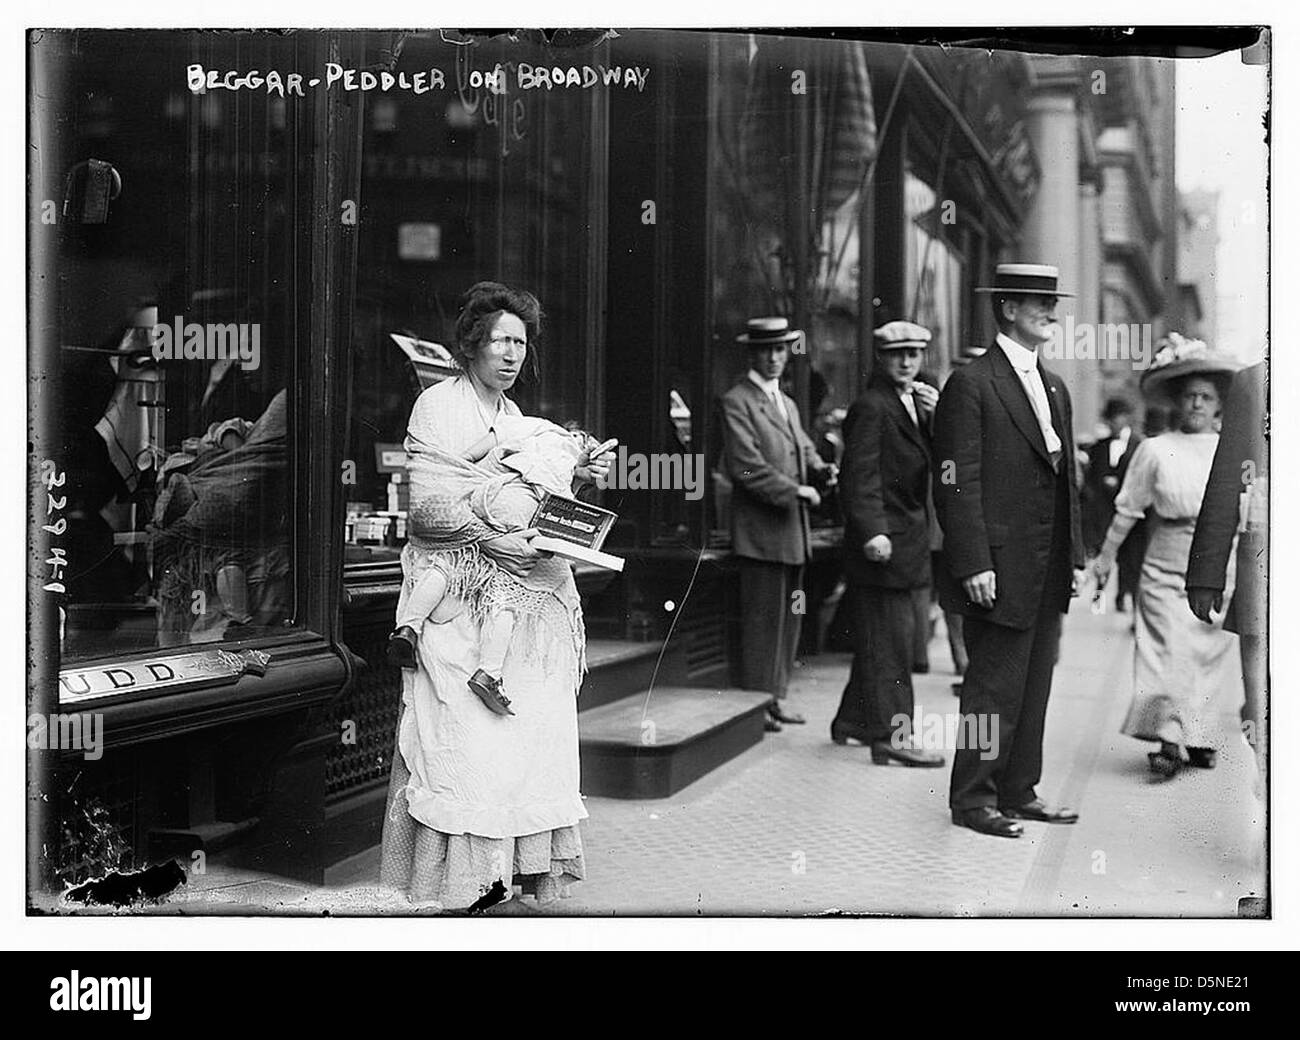 Bettler - Hausierer am Broadway (LOC) Stockfoto